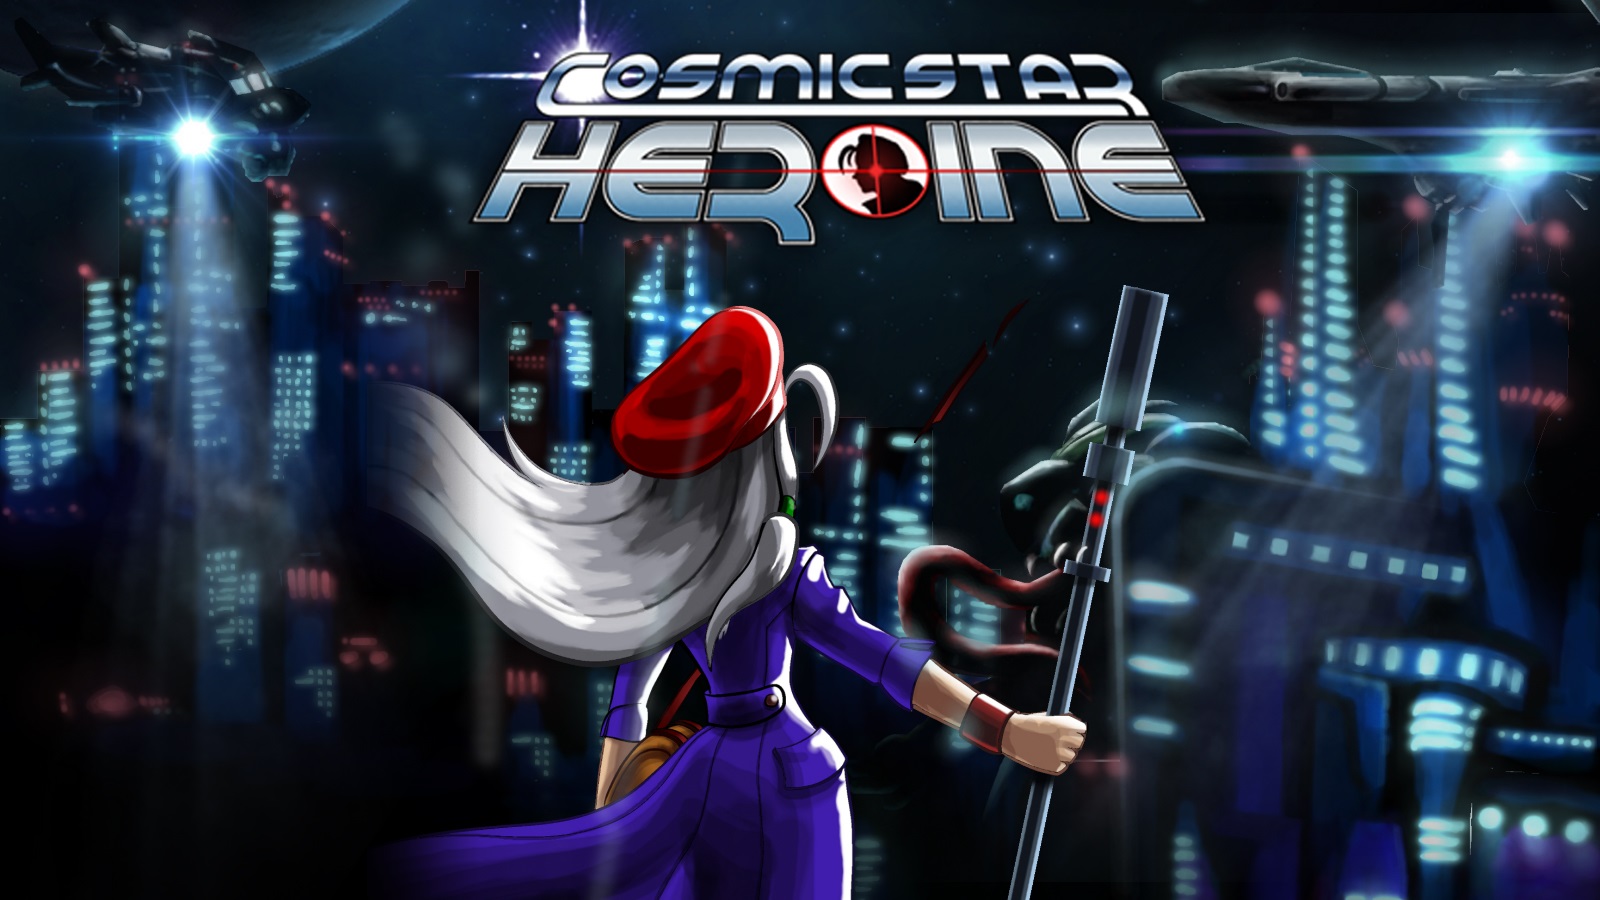 Cosmic Star Heroine ya tiene fecha para su llegada a PlayStation Vita